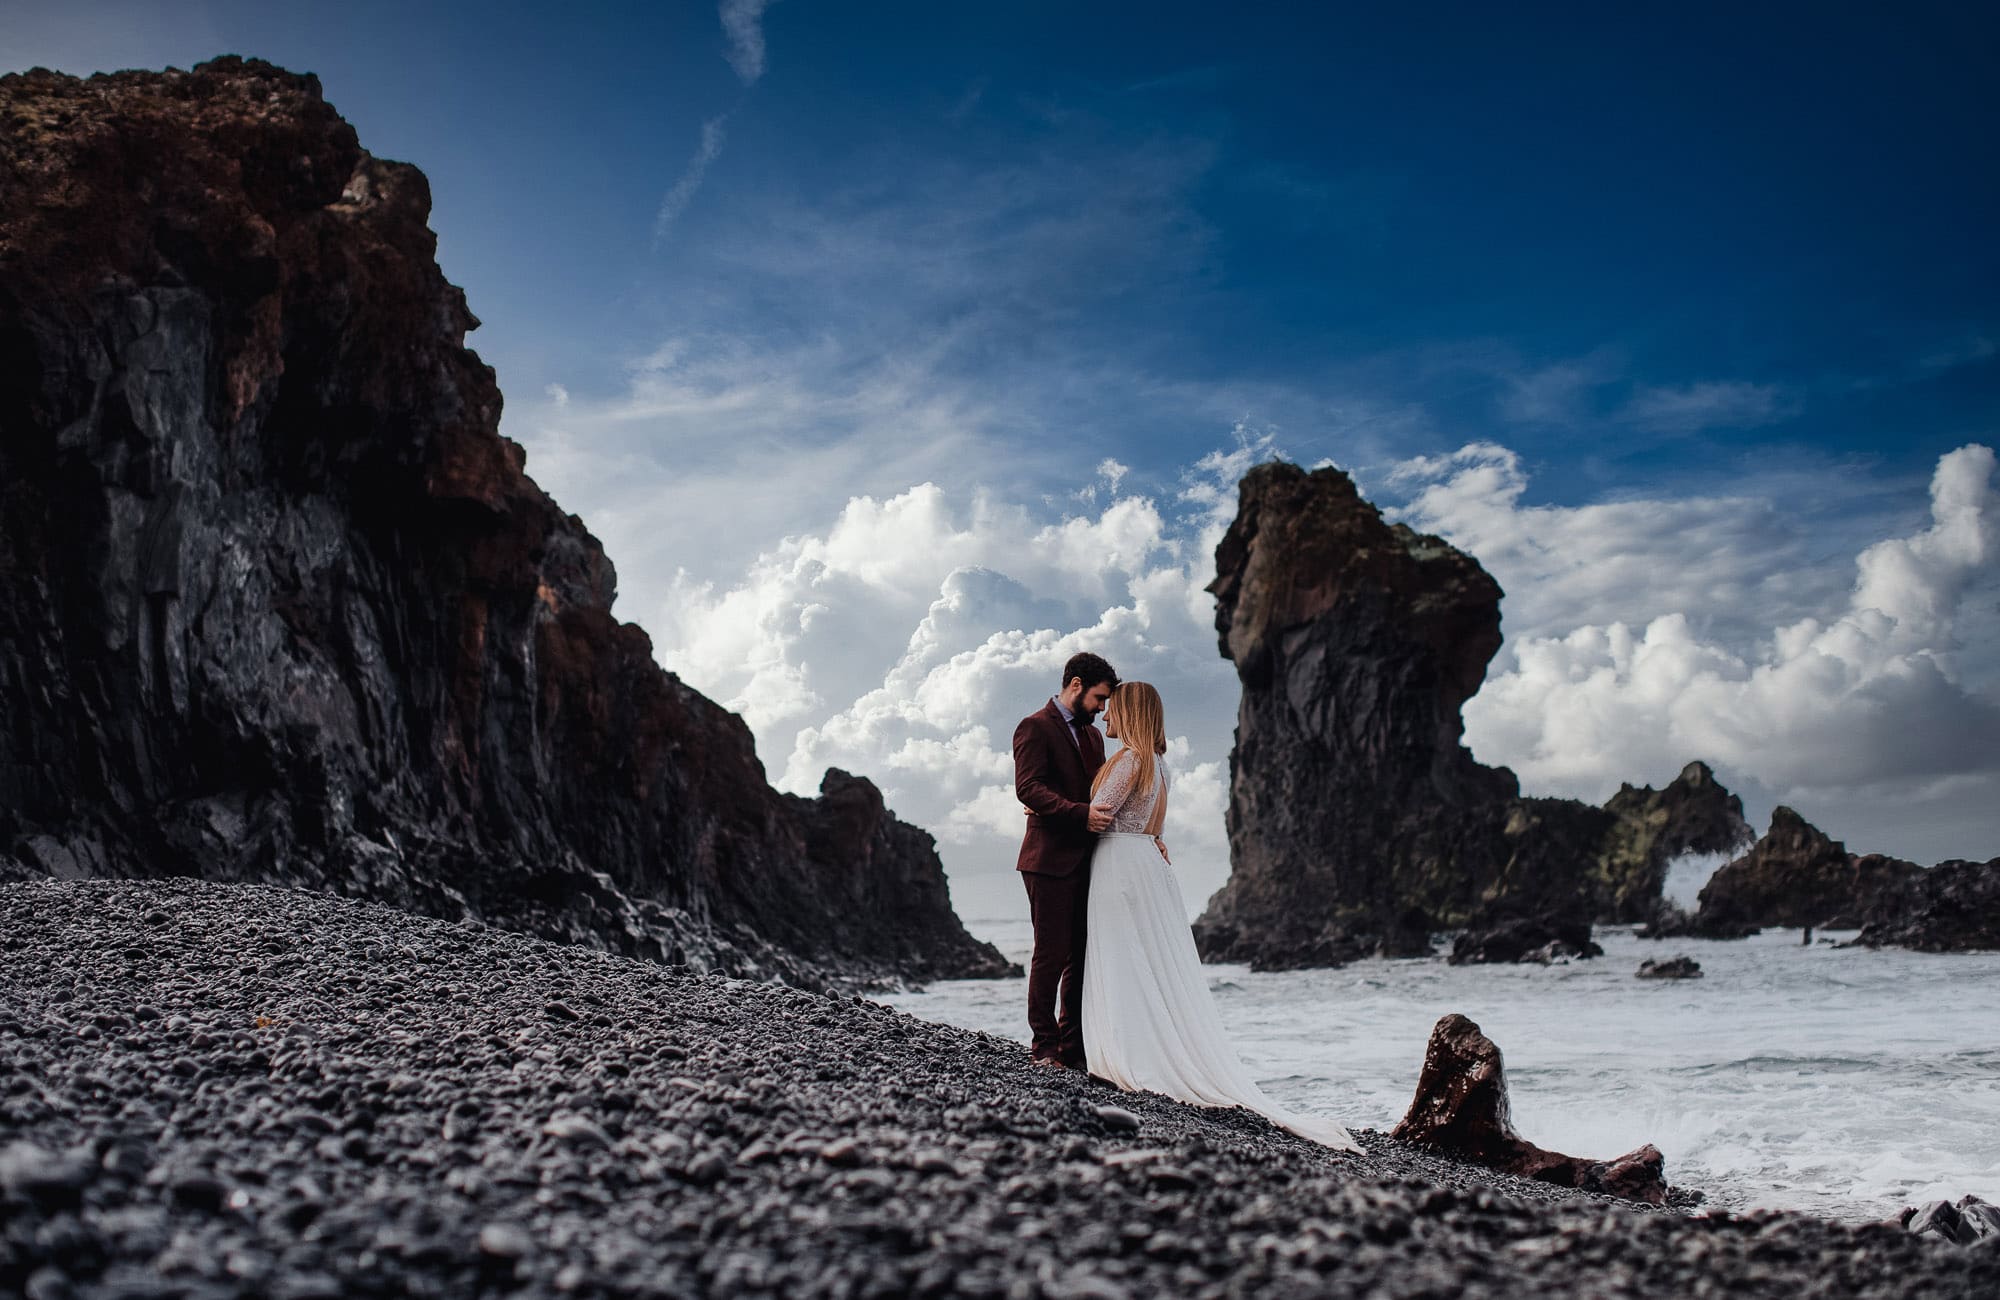 Couple in Iceland Wedding Photo